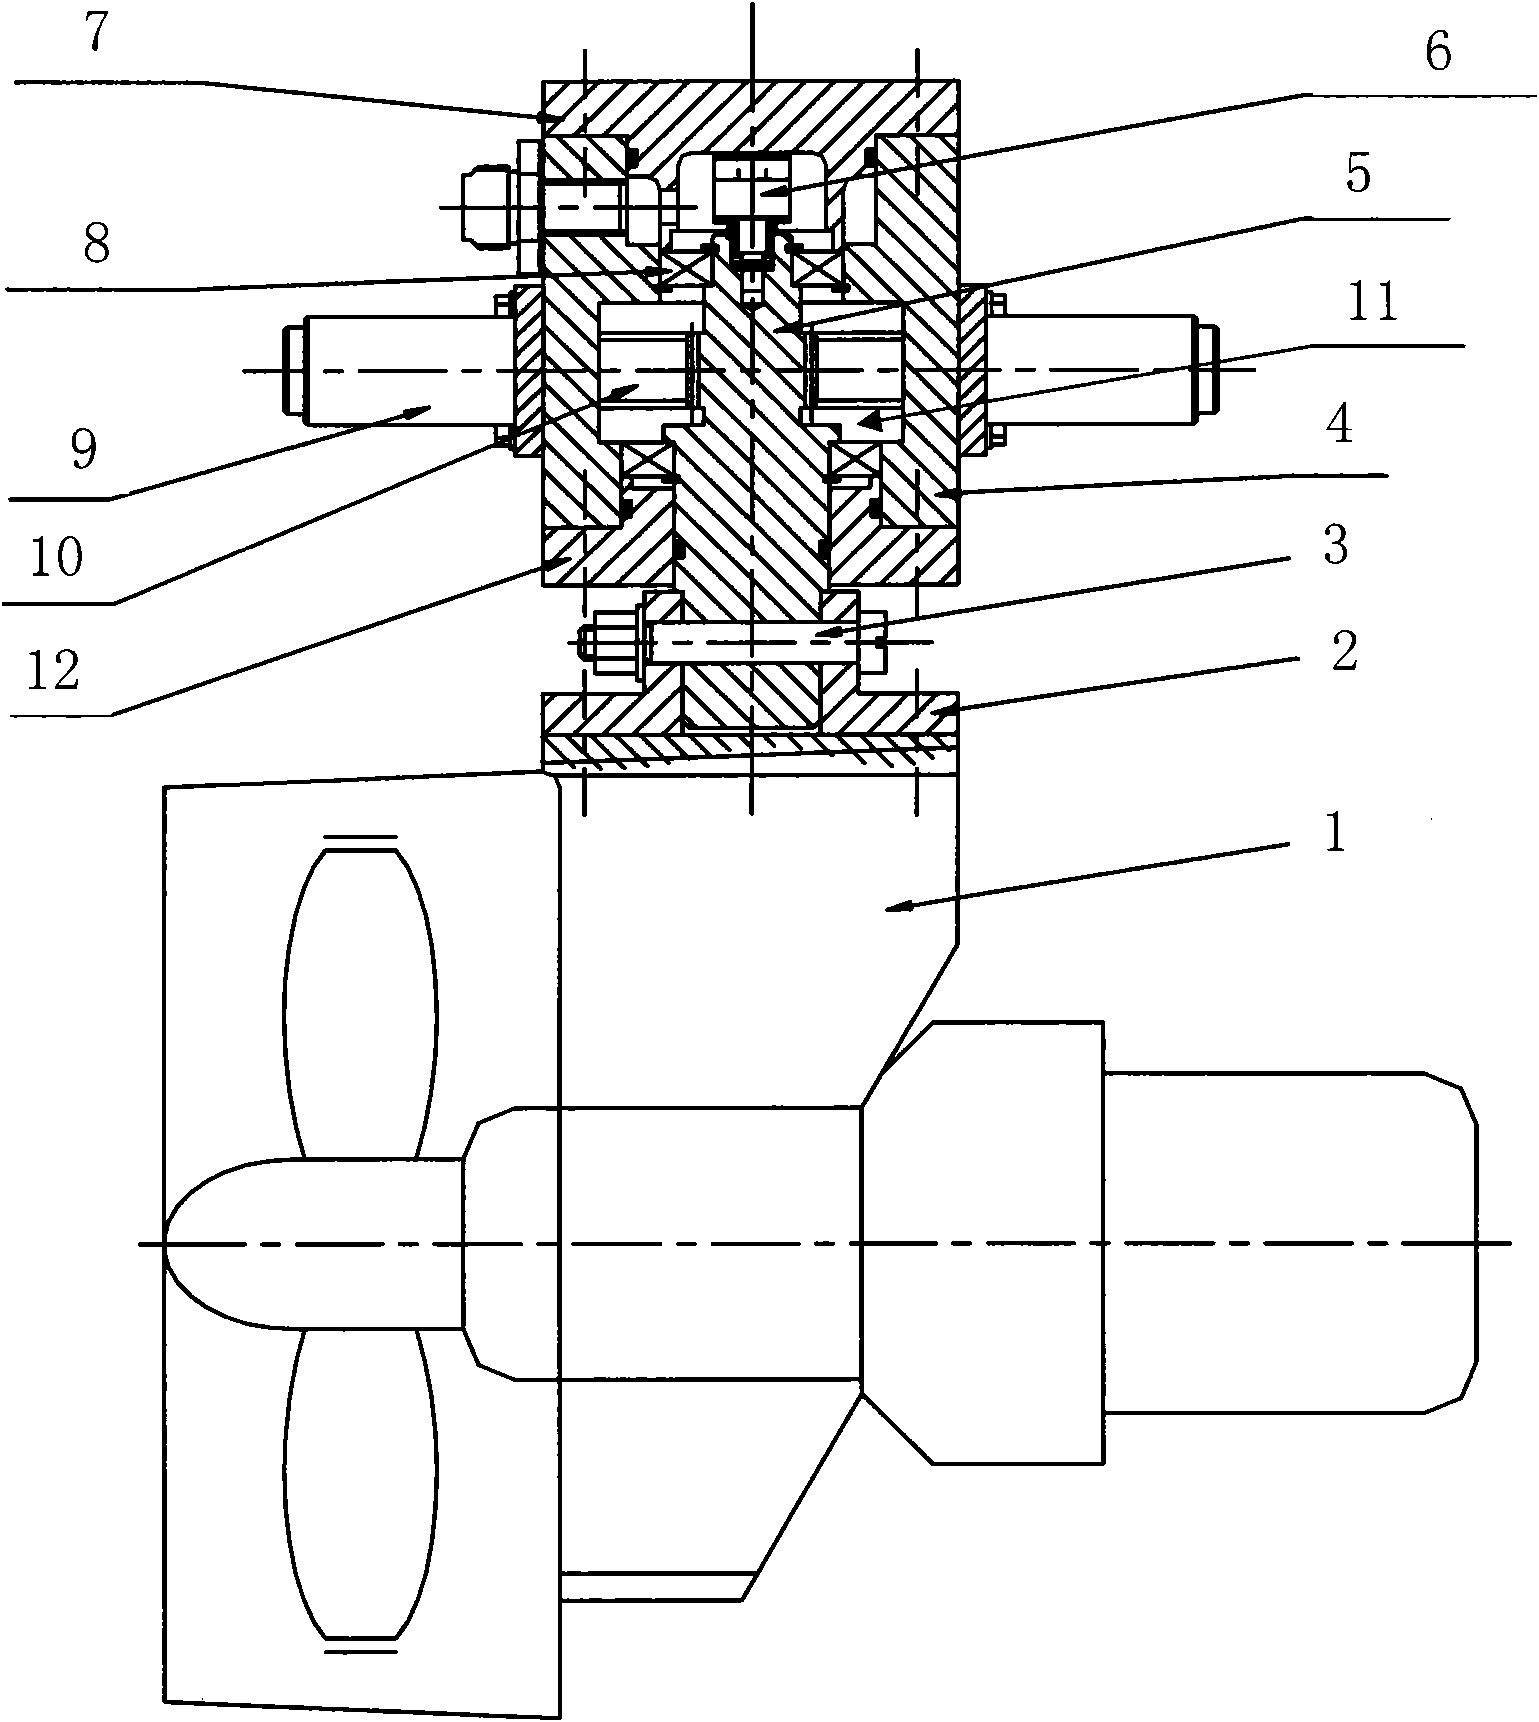 Oscillating type propeller